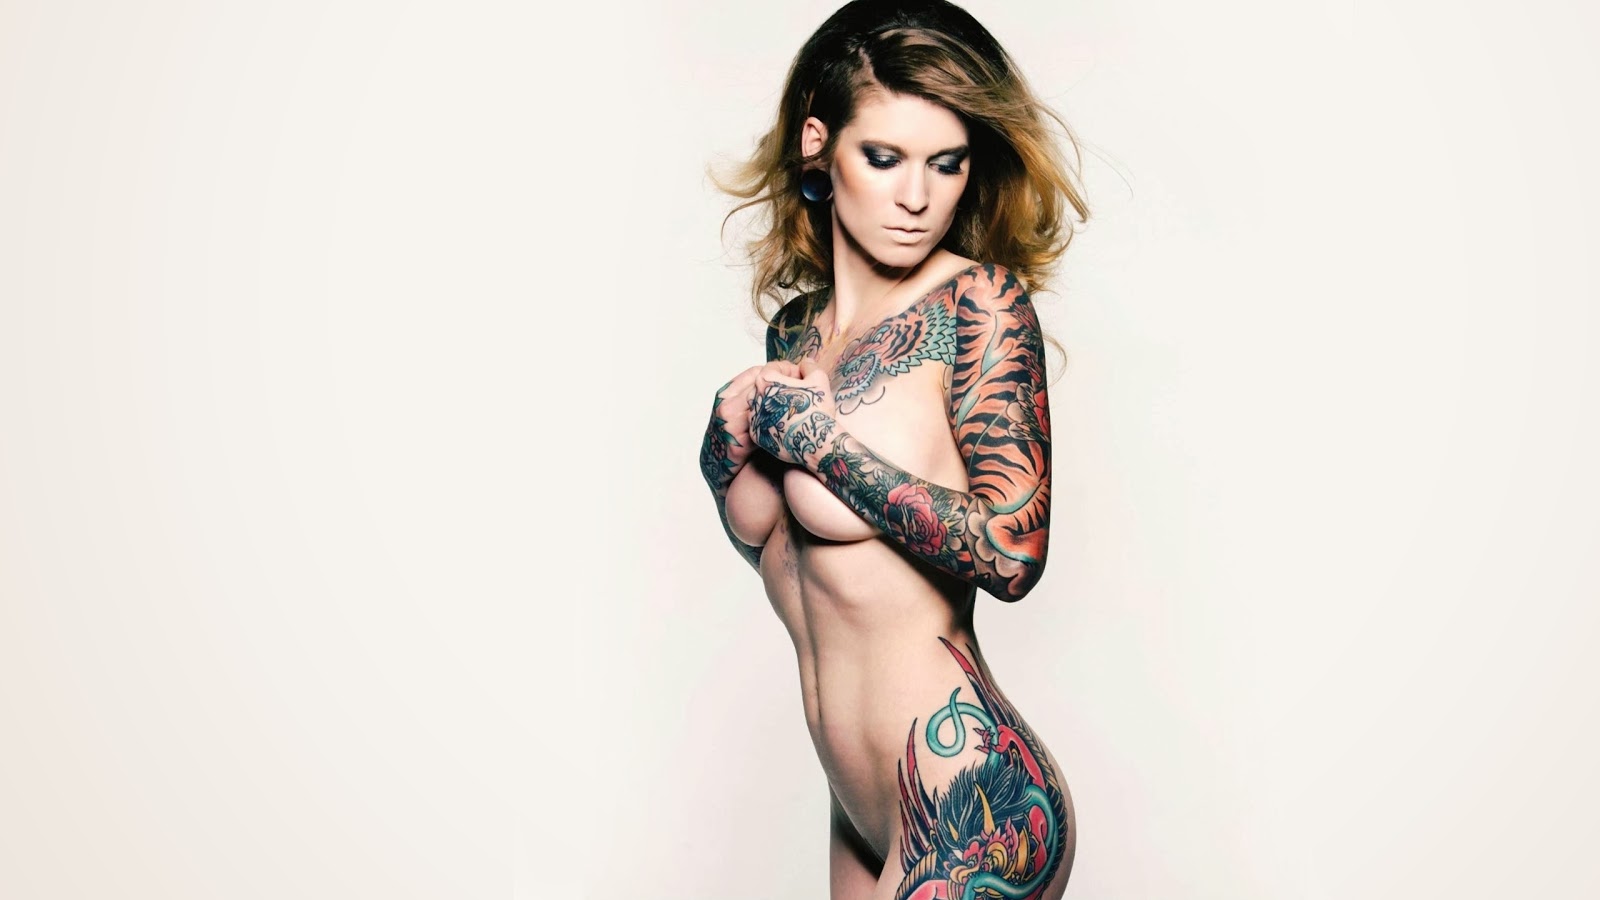 Tattoos Girls High Definition Wallpapers Celebrities Hot Wallpapers